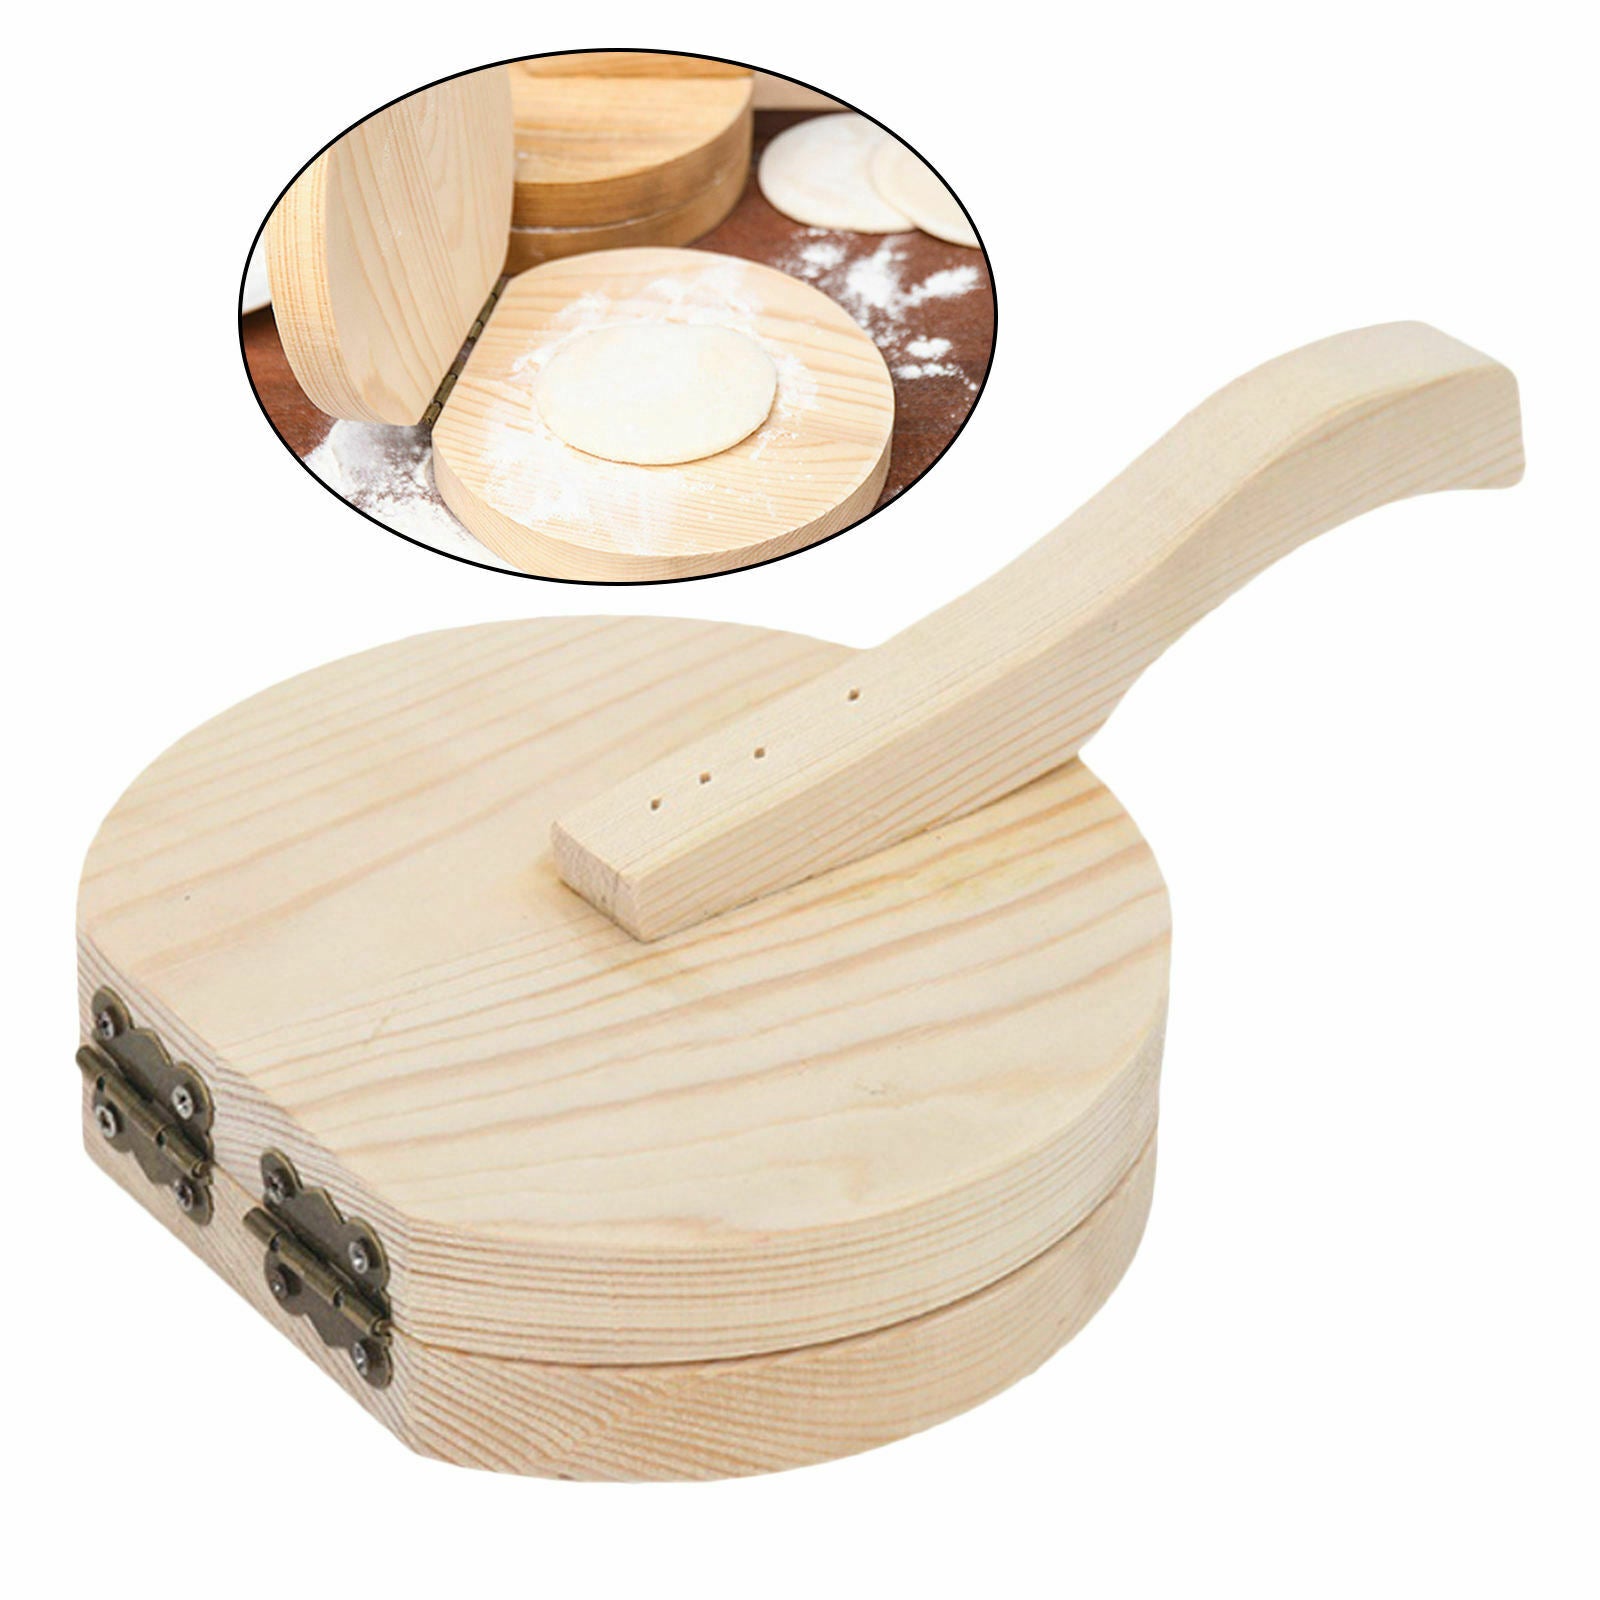 Wood Dough Presser Skin Wrapper Pie Pastry Maker for Baking Gadget Supplies